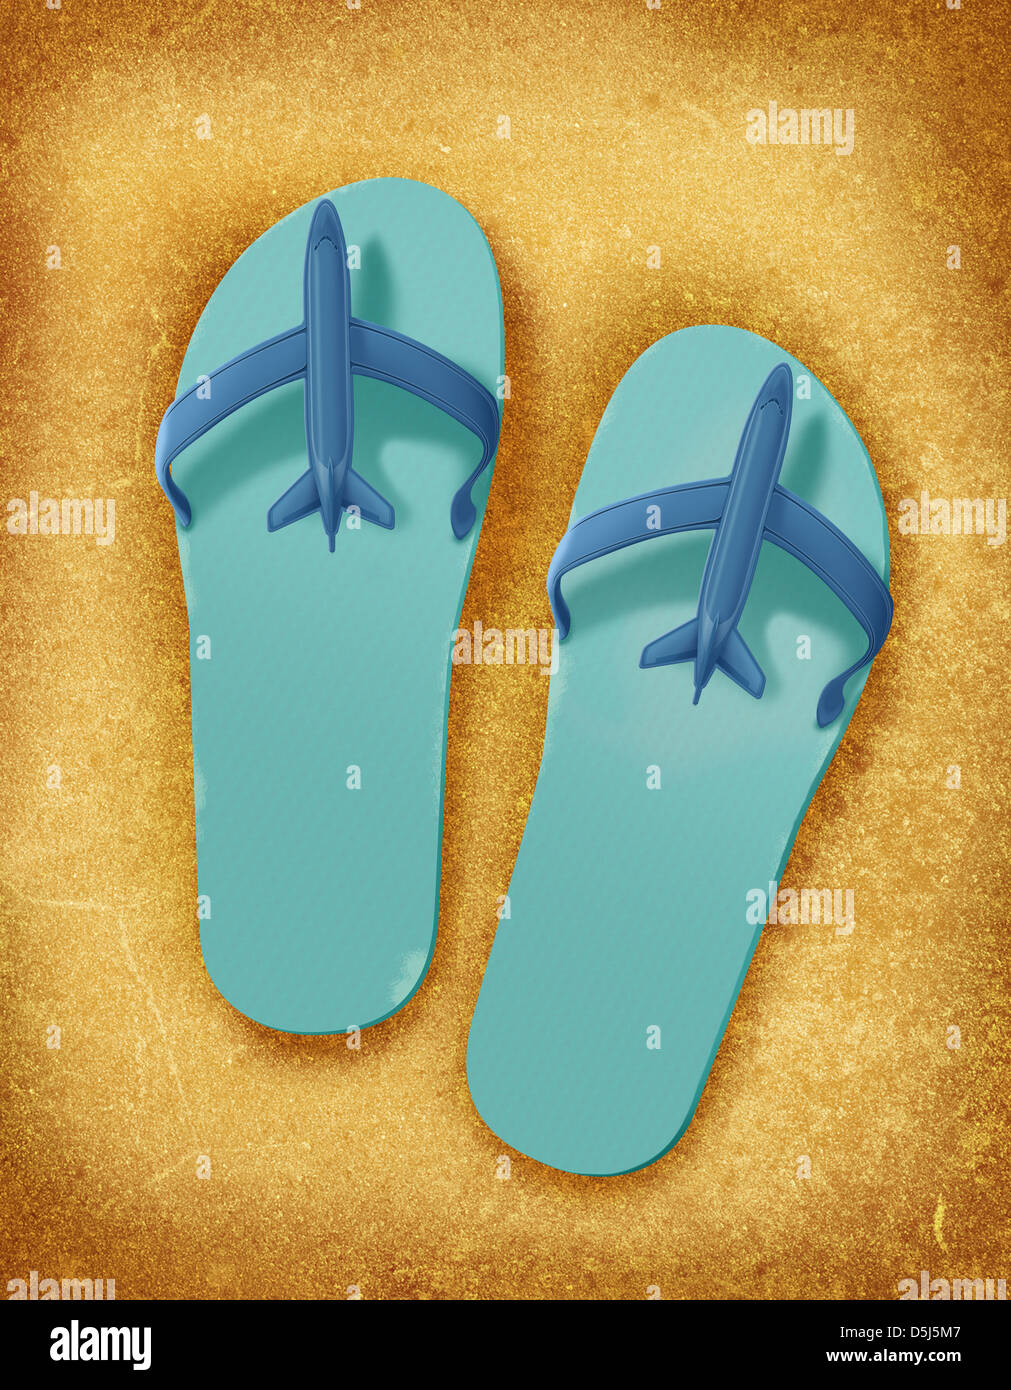 Illustration of beach slippers Stock Photo